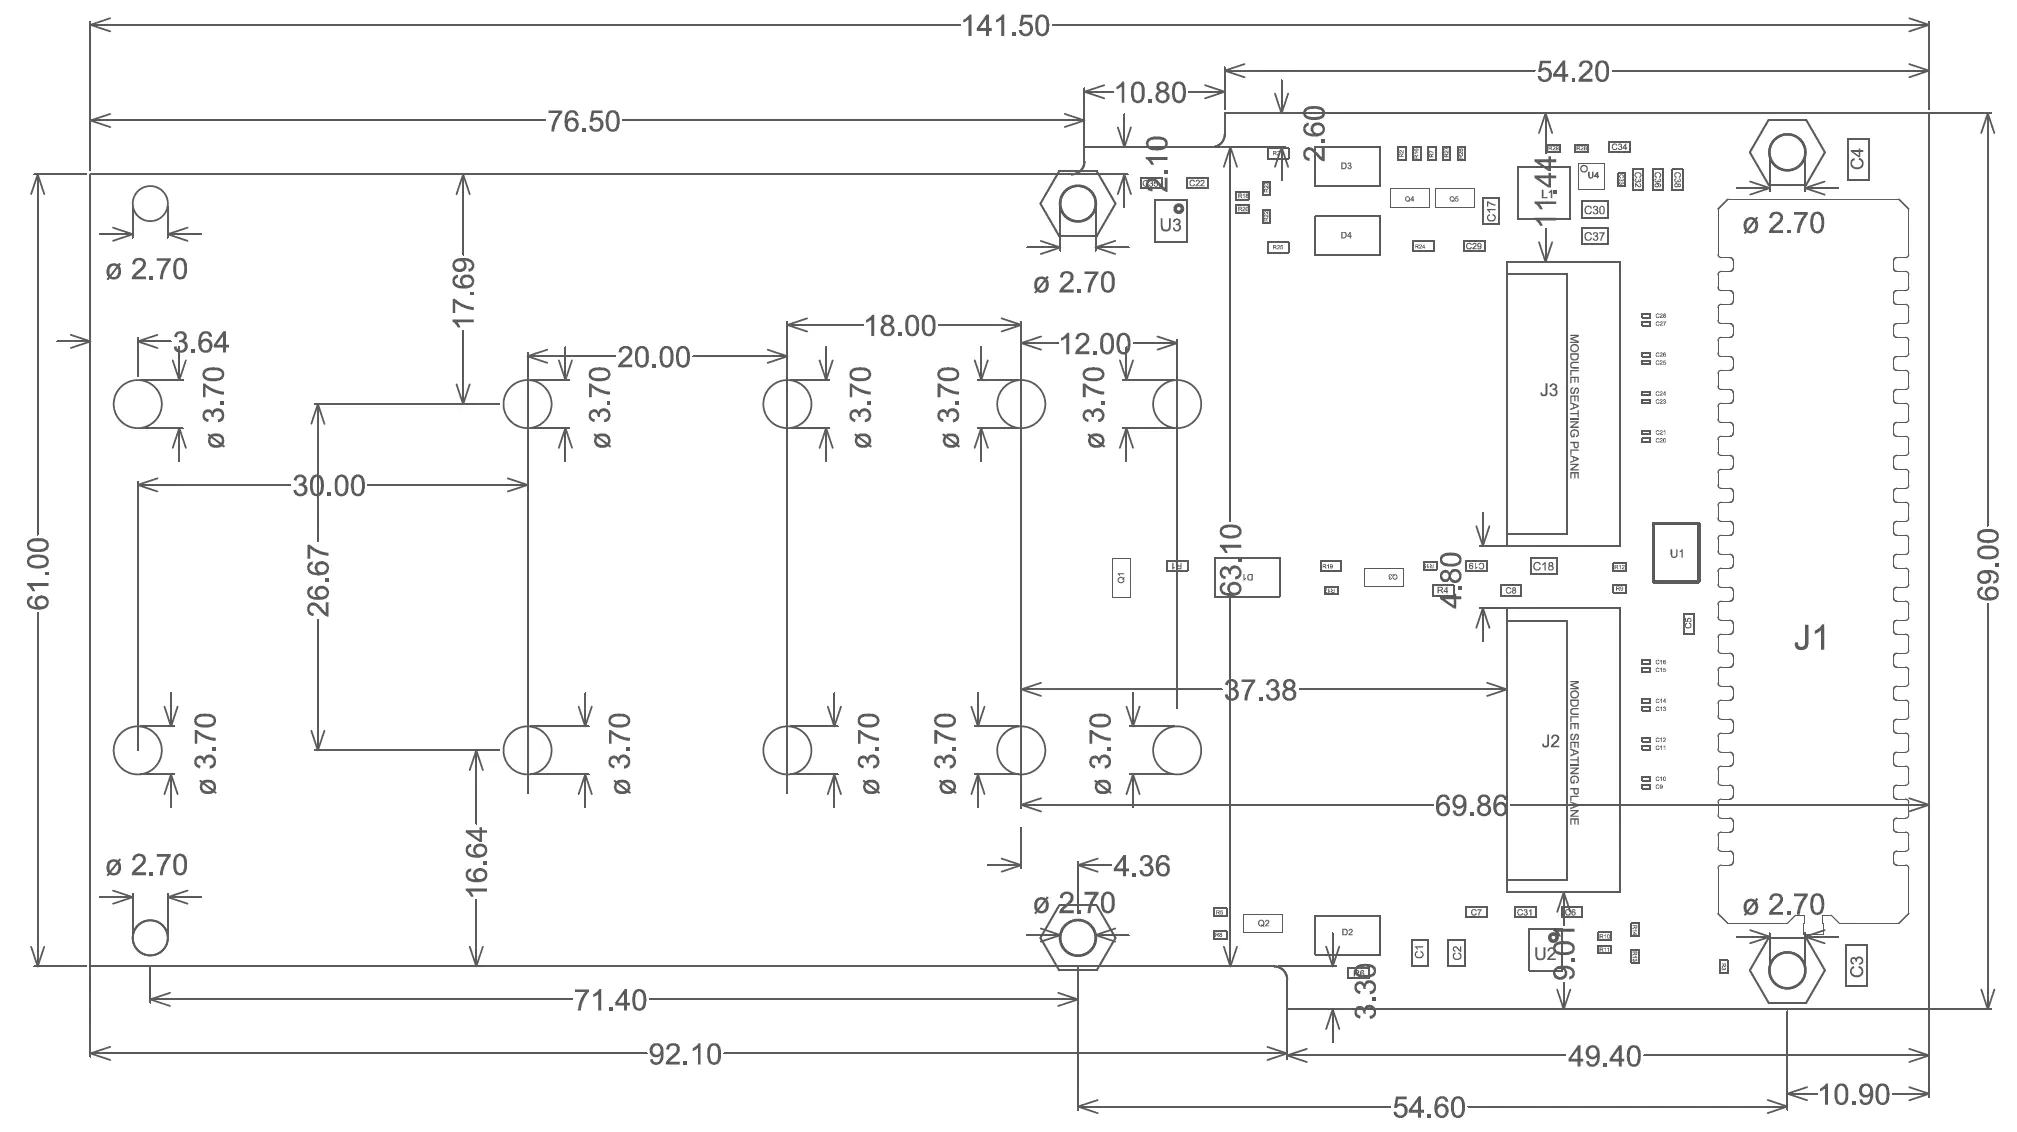 FPGA Drive FMC Gen4 mechanical drawing